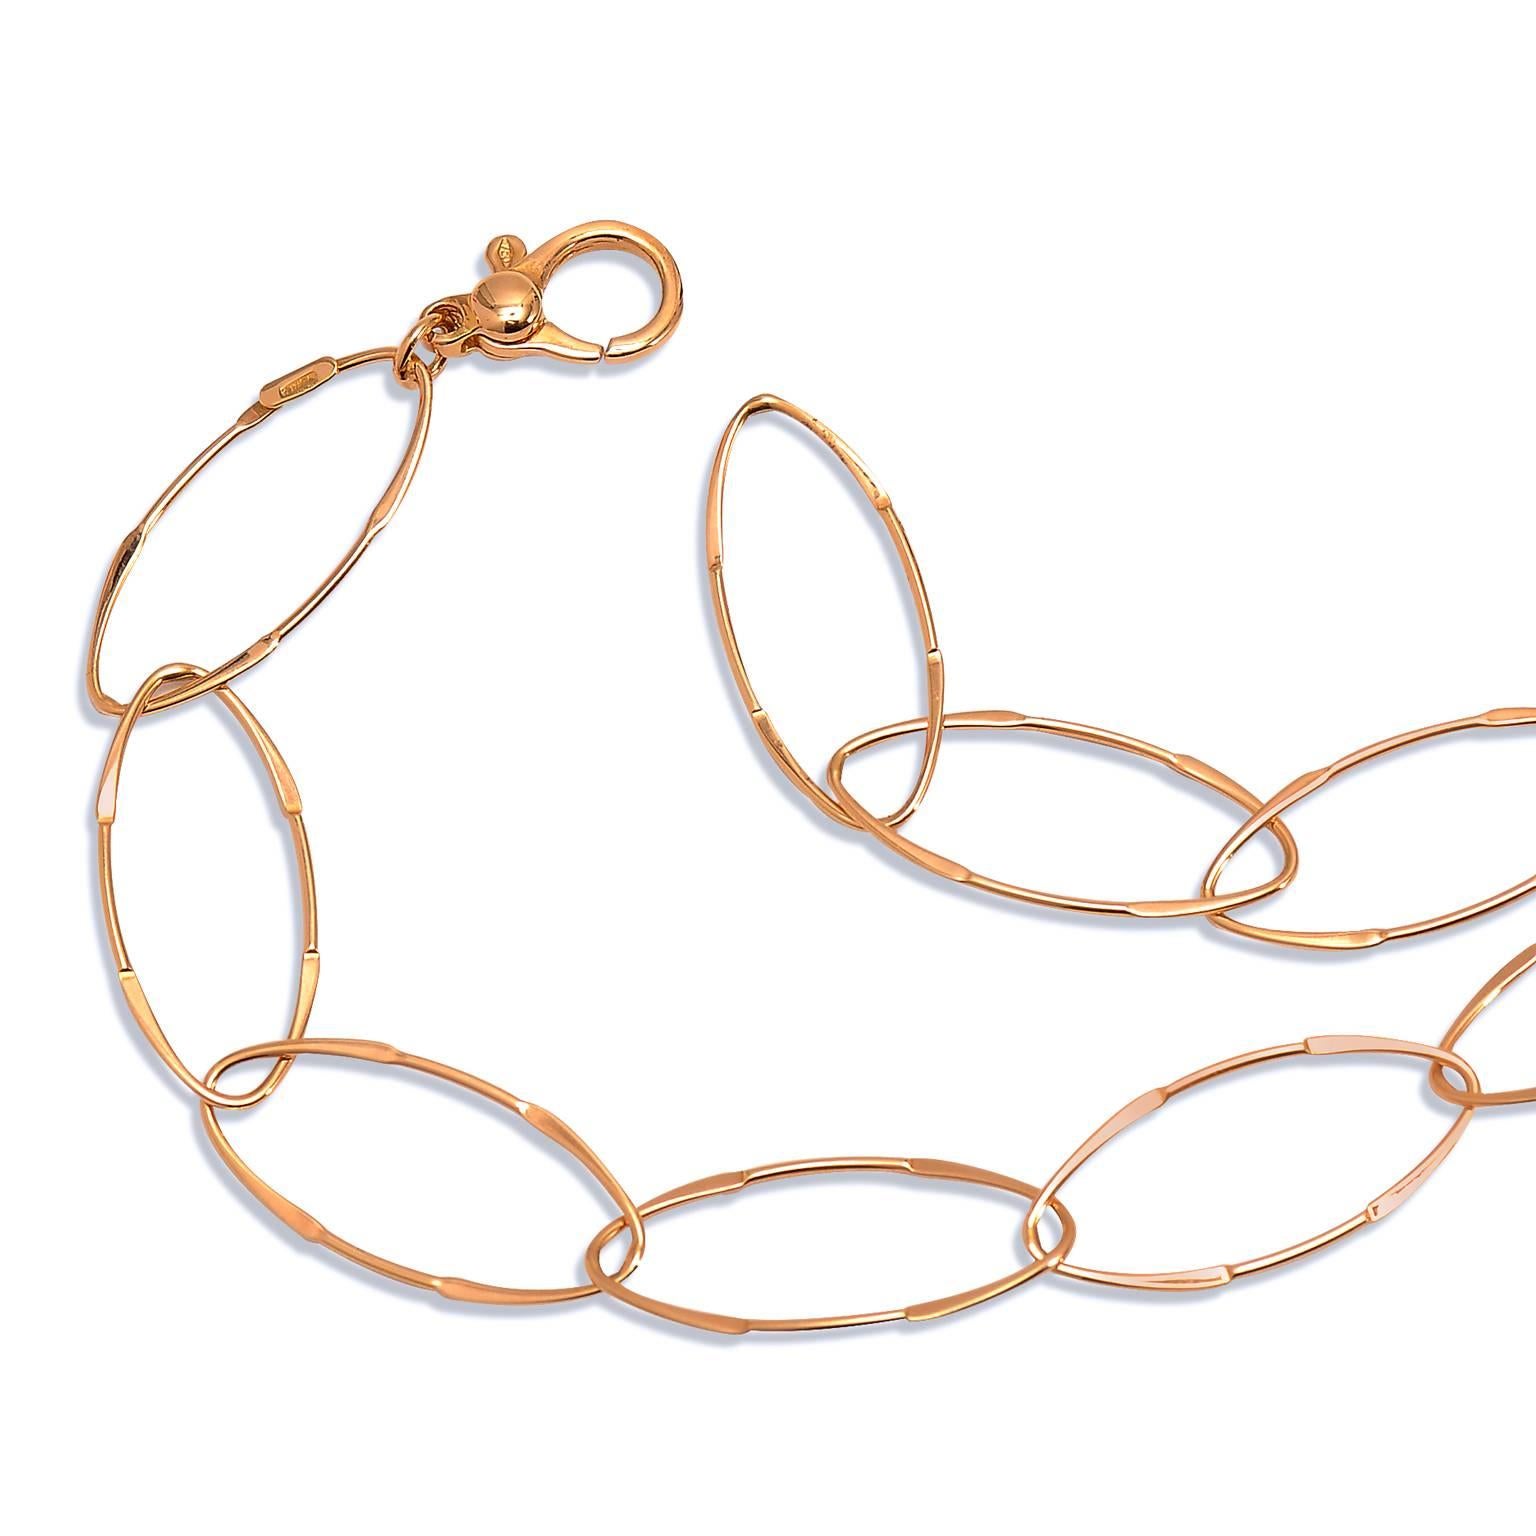 Sleek, oval-shaped links fashioned in 18 karat rose gold loop together to form a modern long necklace.